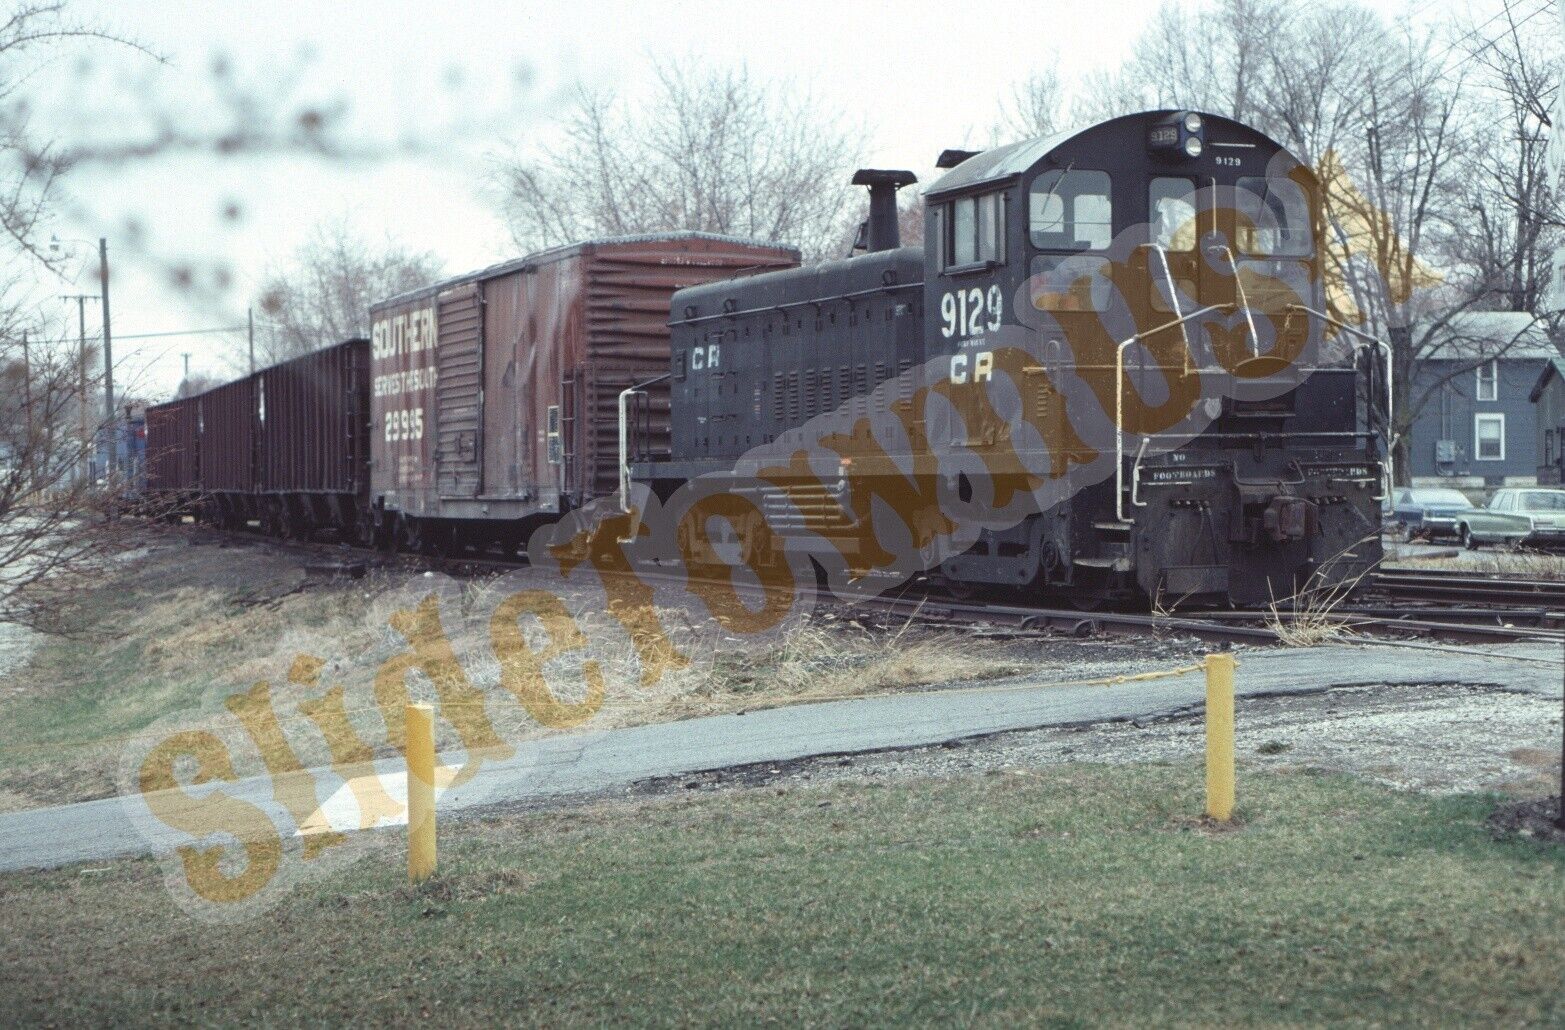 Vtg 1981 Train Slide 9129 CR Conrail Engine X1T066